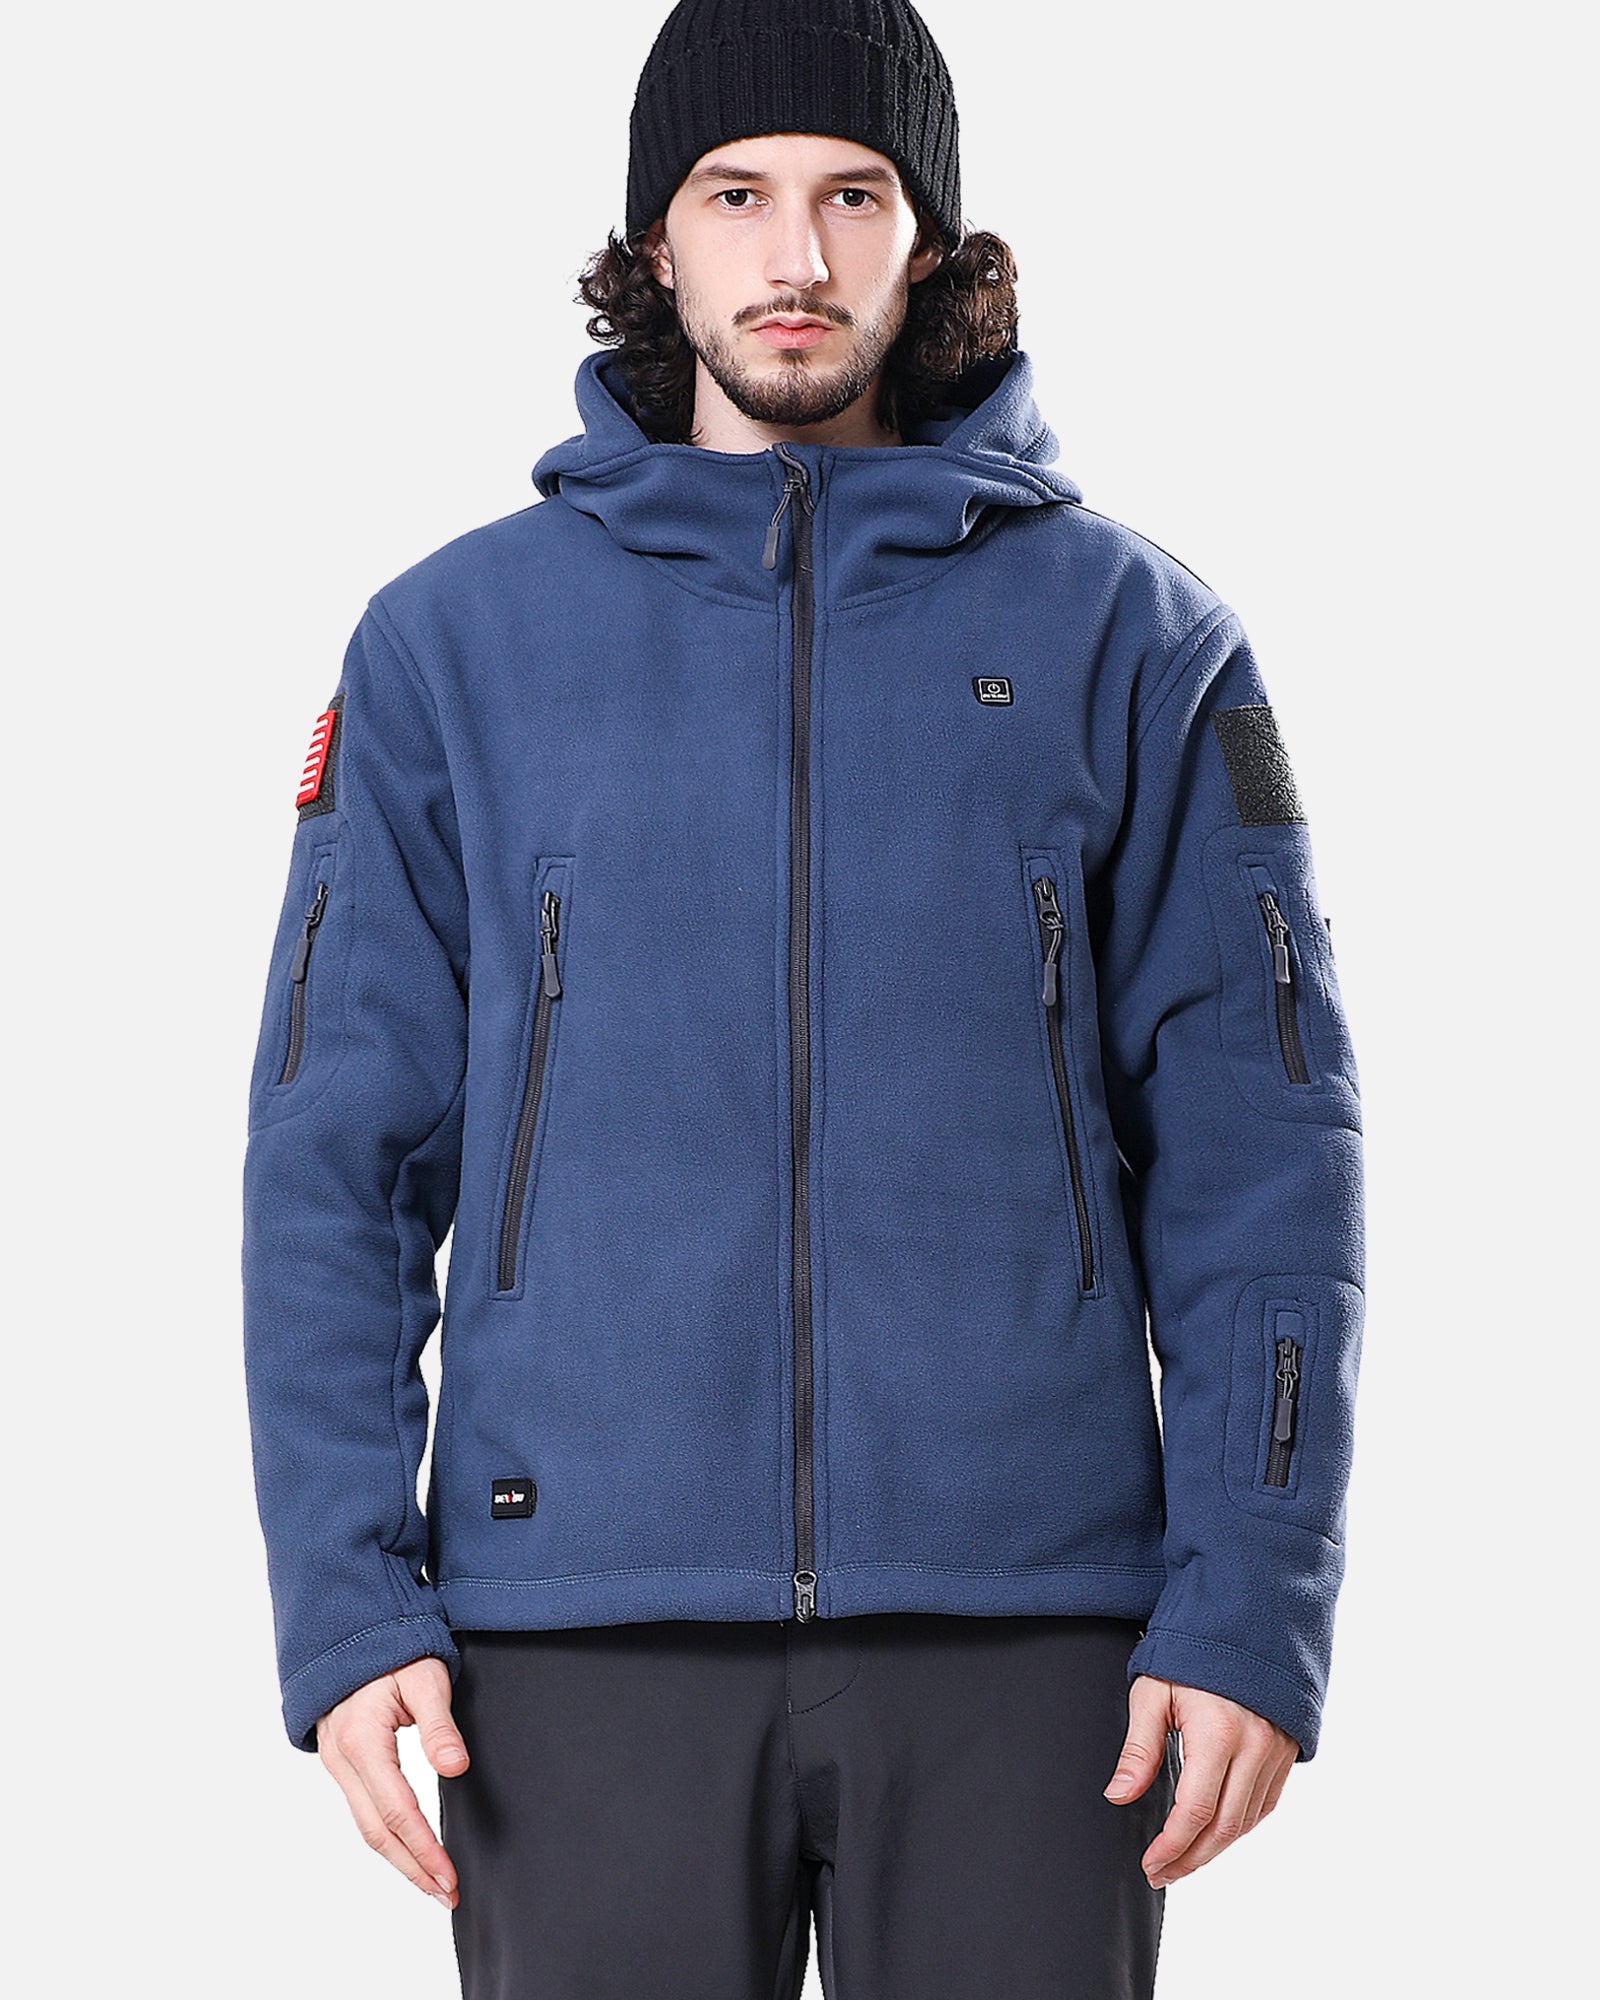 DEWBU® Men's Polar Fleece Heated Jacket With 12V Battery Pack